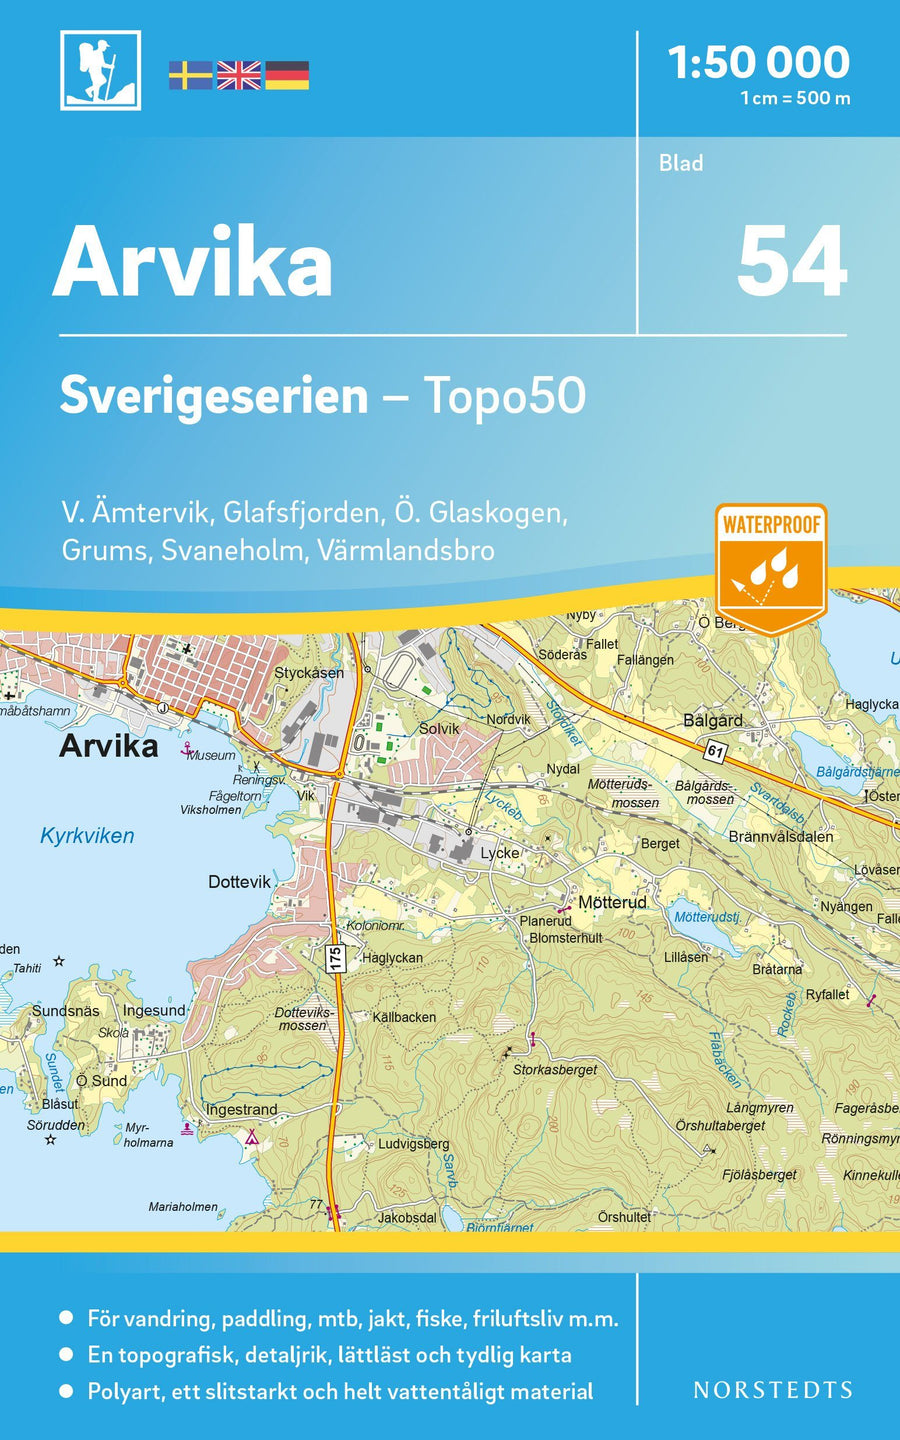 Carte topographique n° 54 - Arvika (Suède) | Norstedts - Sverigeserien carte pliée Norstedts 